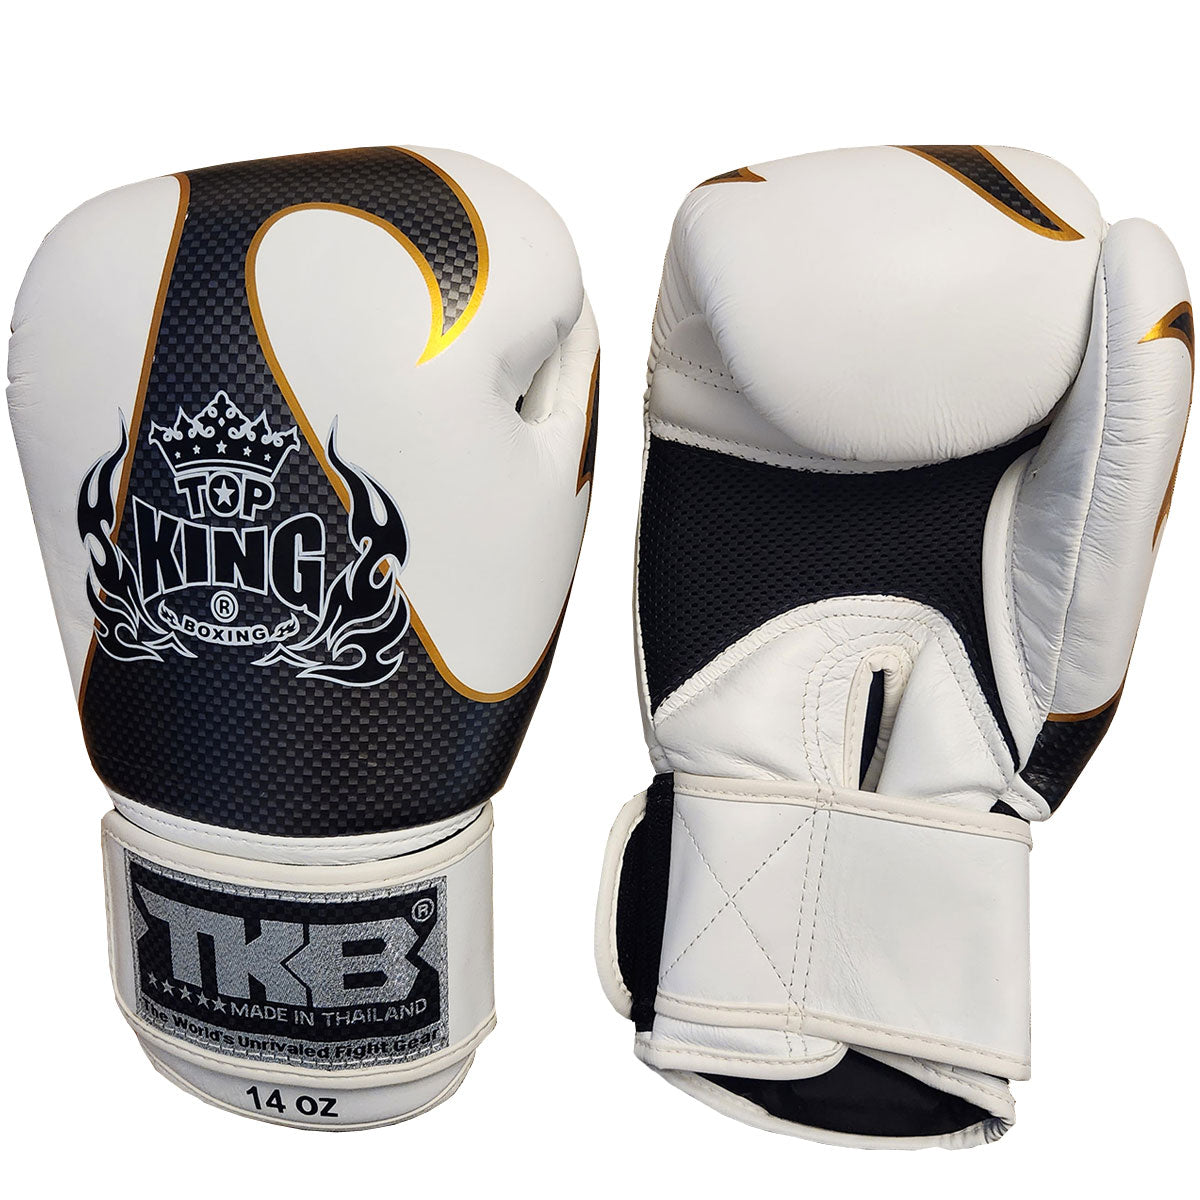 Buddha Top Premium boxing gloves matt black